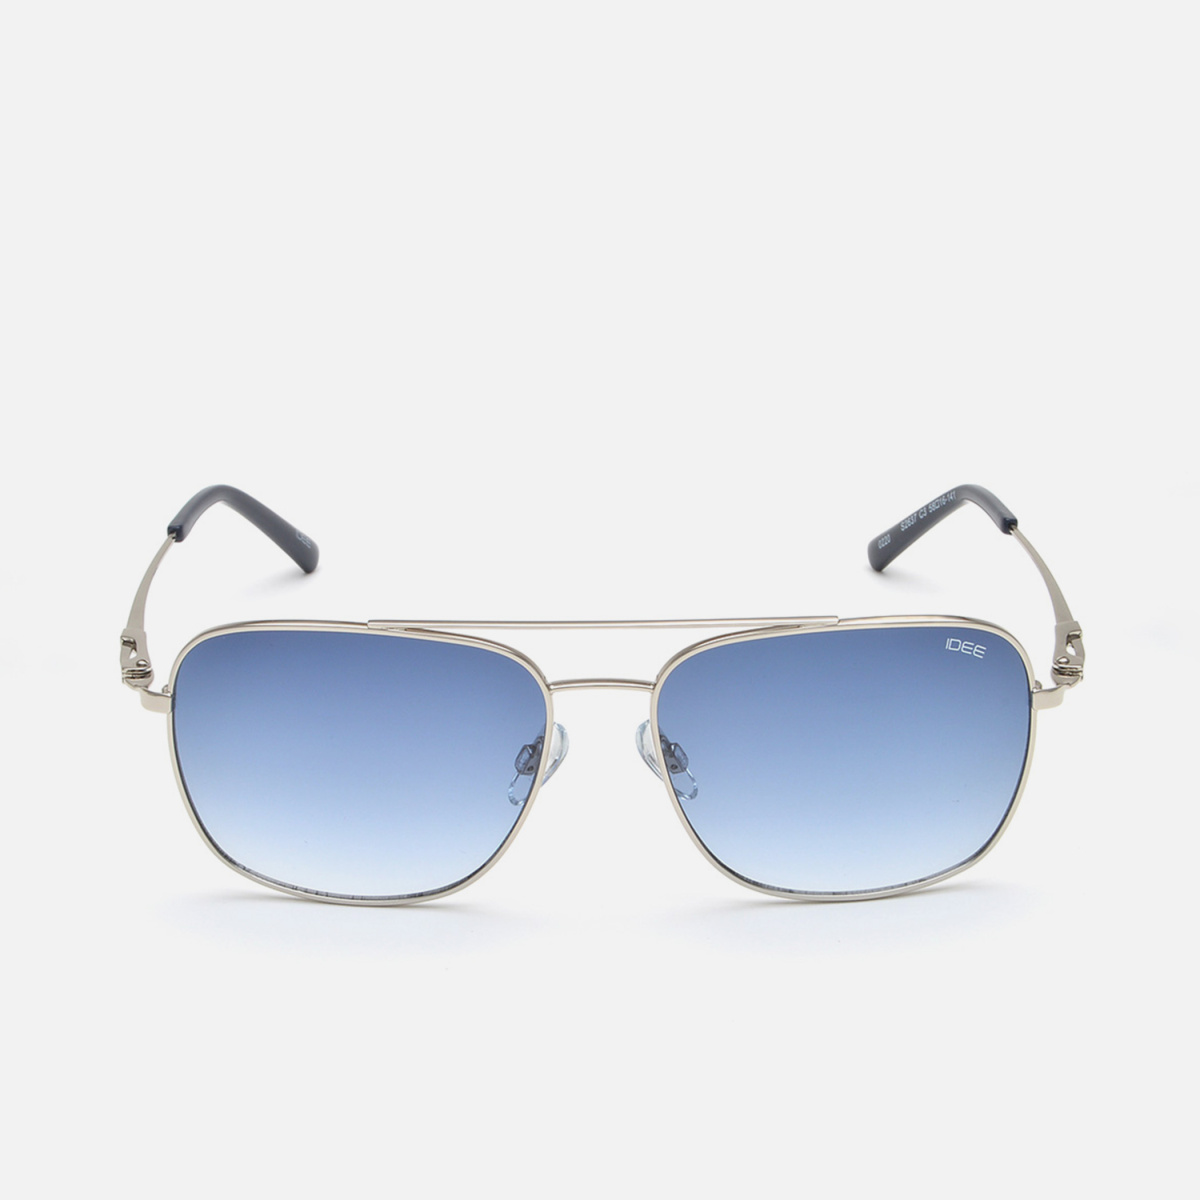 Buy Men Square & Aviator Sunglasses, LW593, Green & Black, Pack of 2 at  Amazon.in